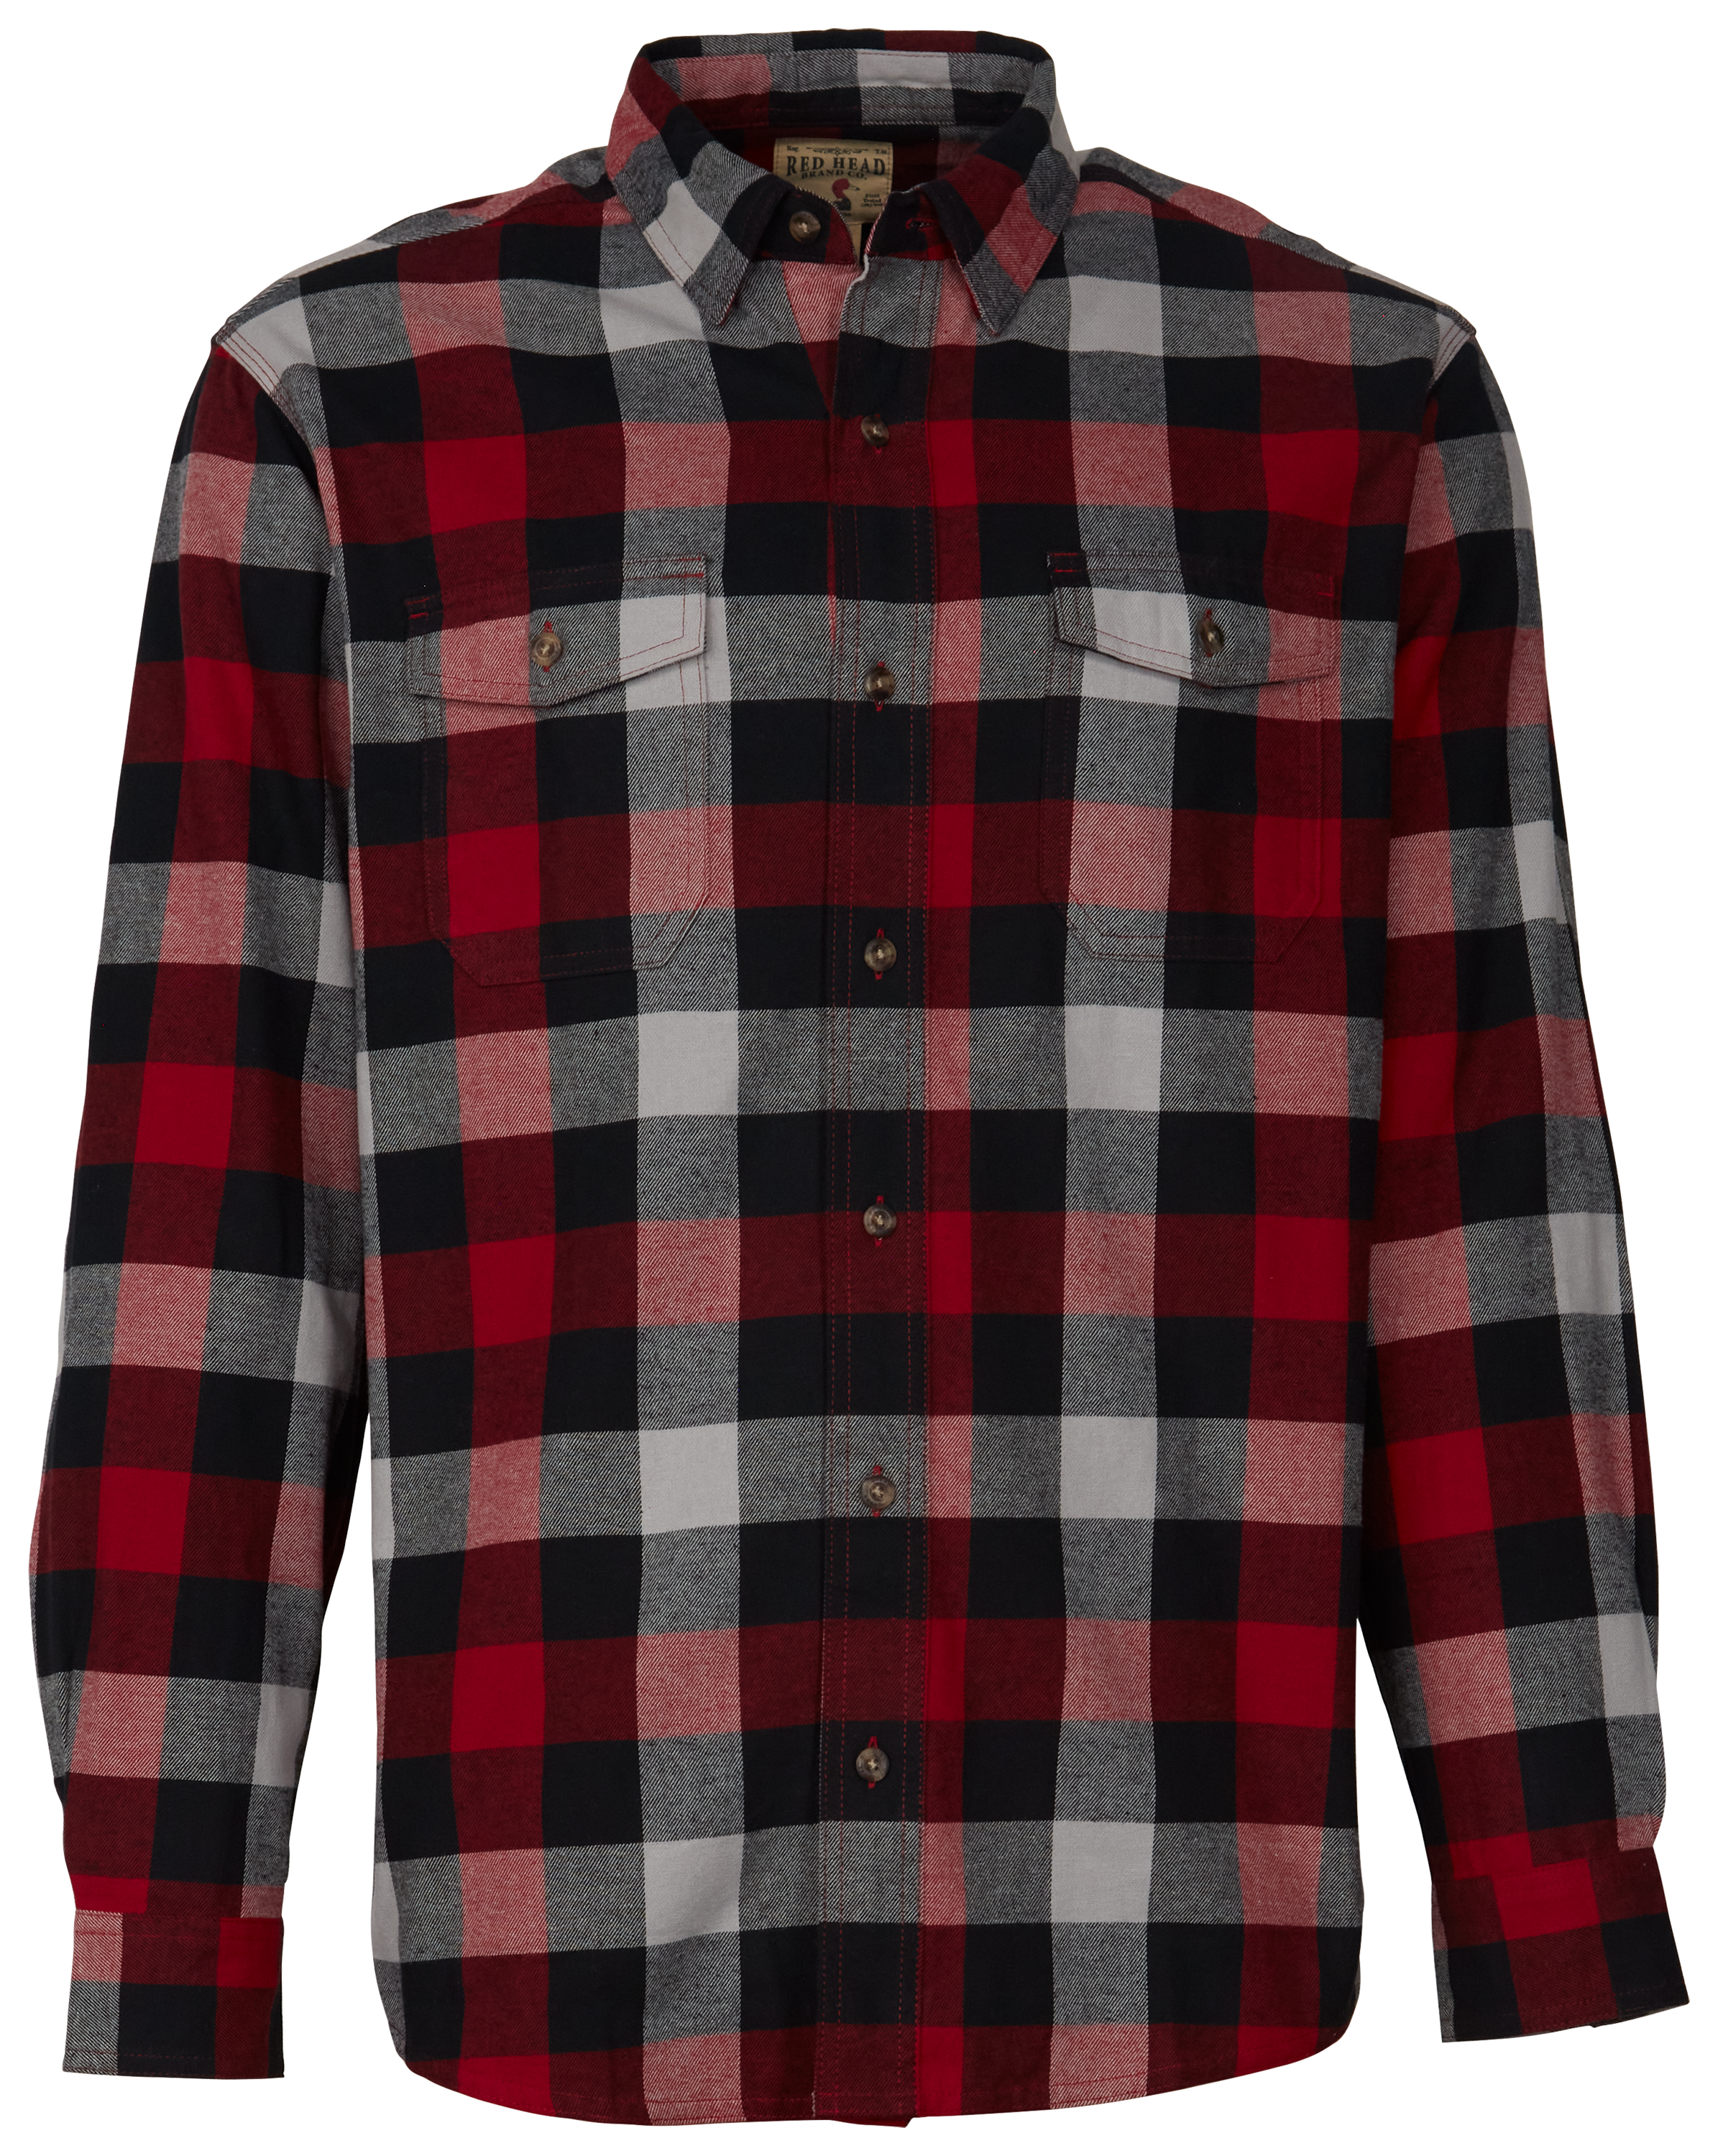 RedHead Buffalo Creek Flannel Long-Sleeve Shirt for Men - Red/Gray - S